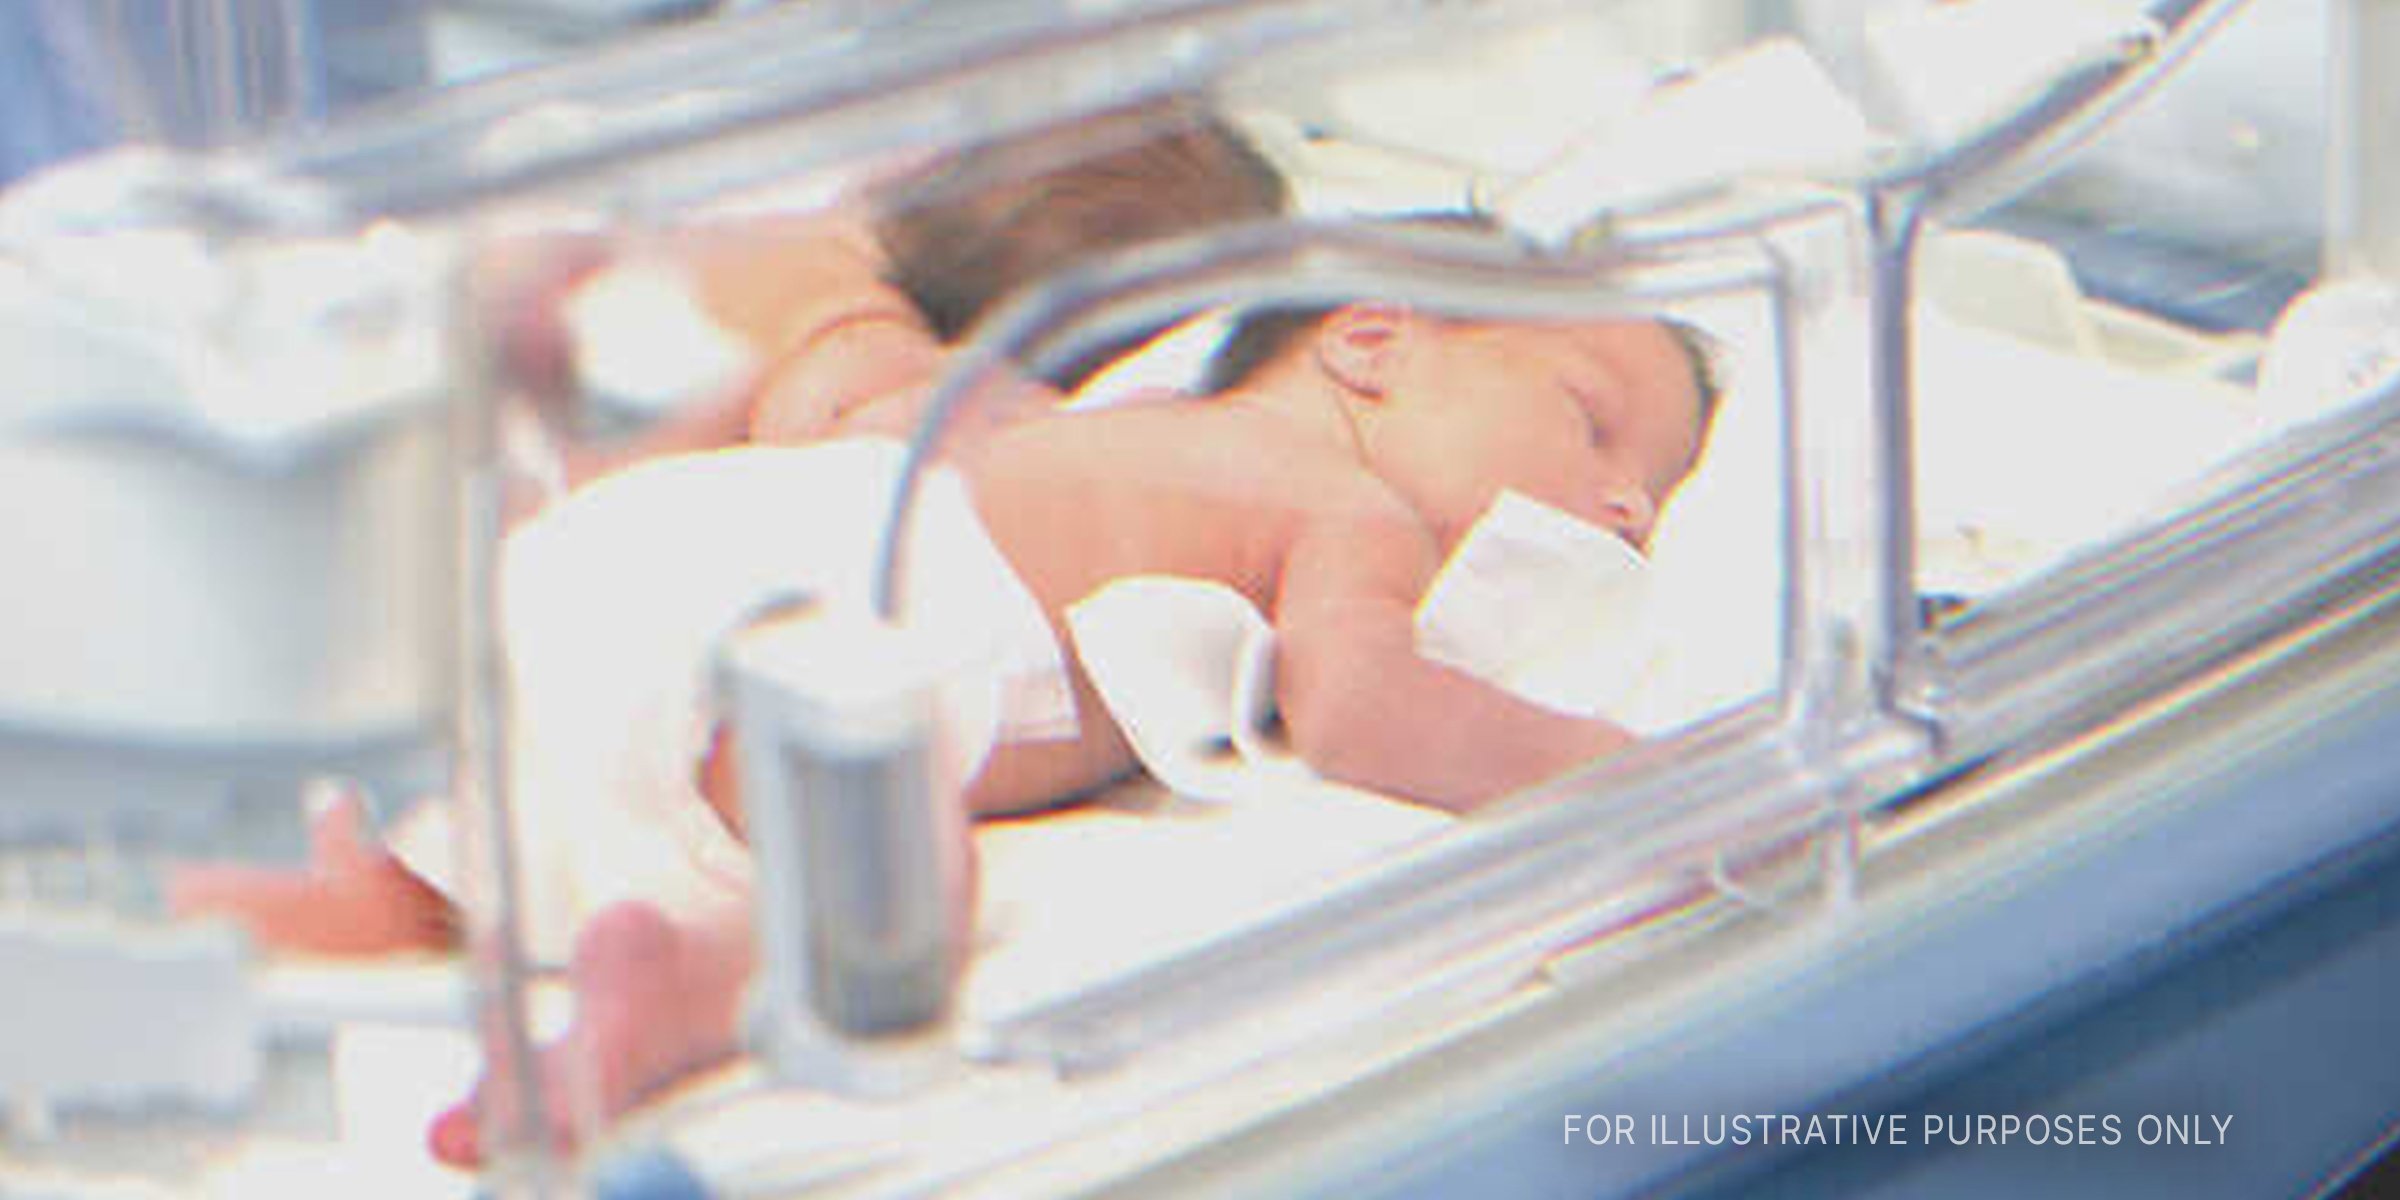 Newborn baby in an incubator | Source: Shutterstock